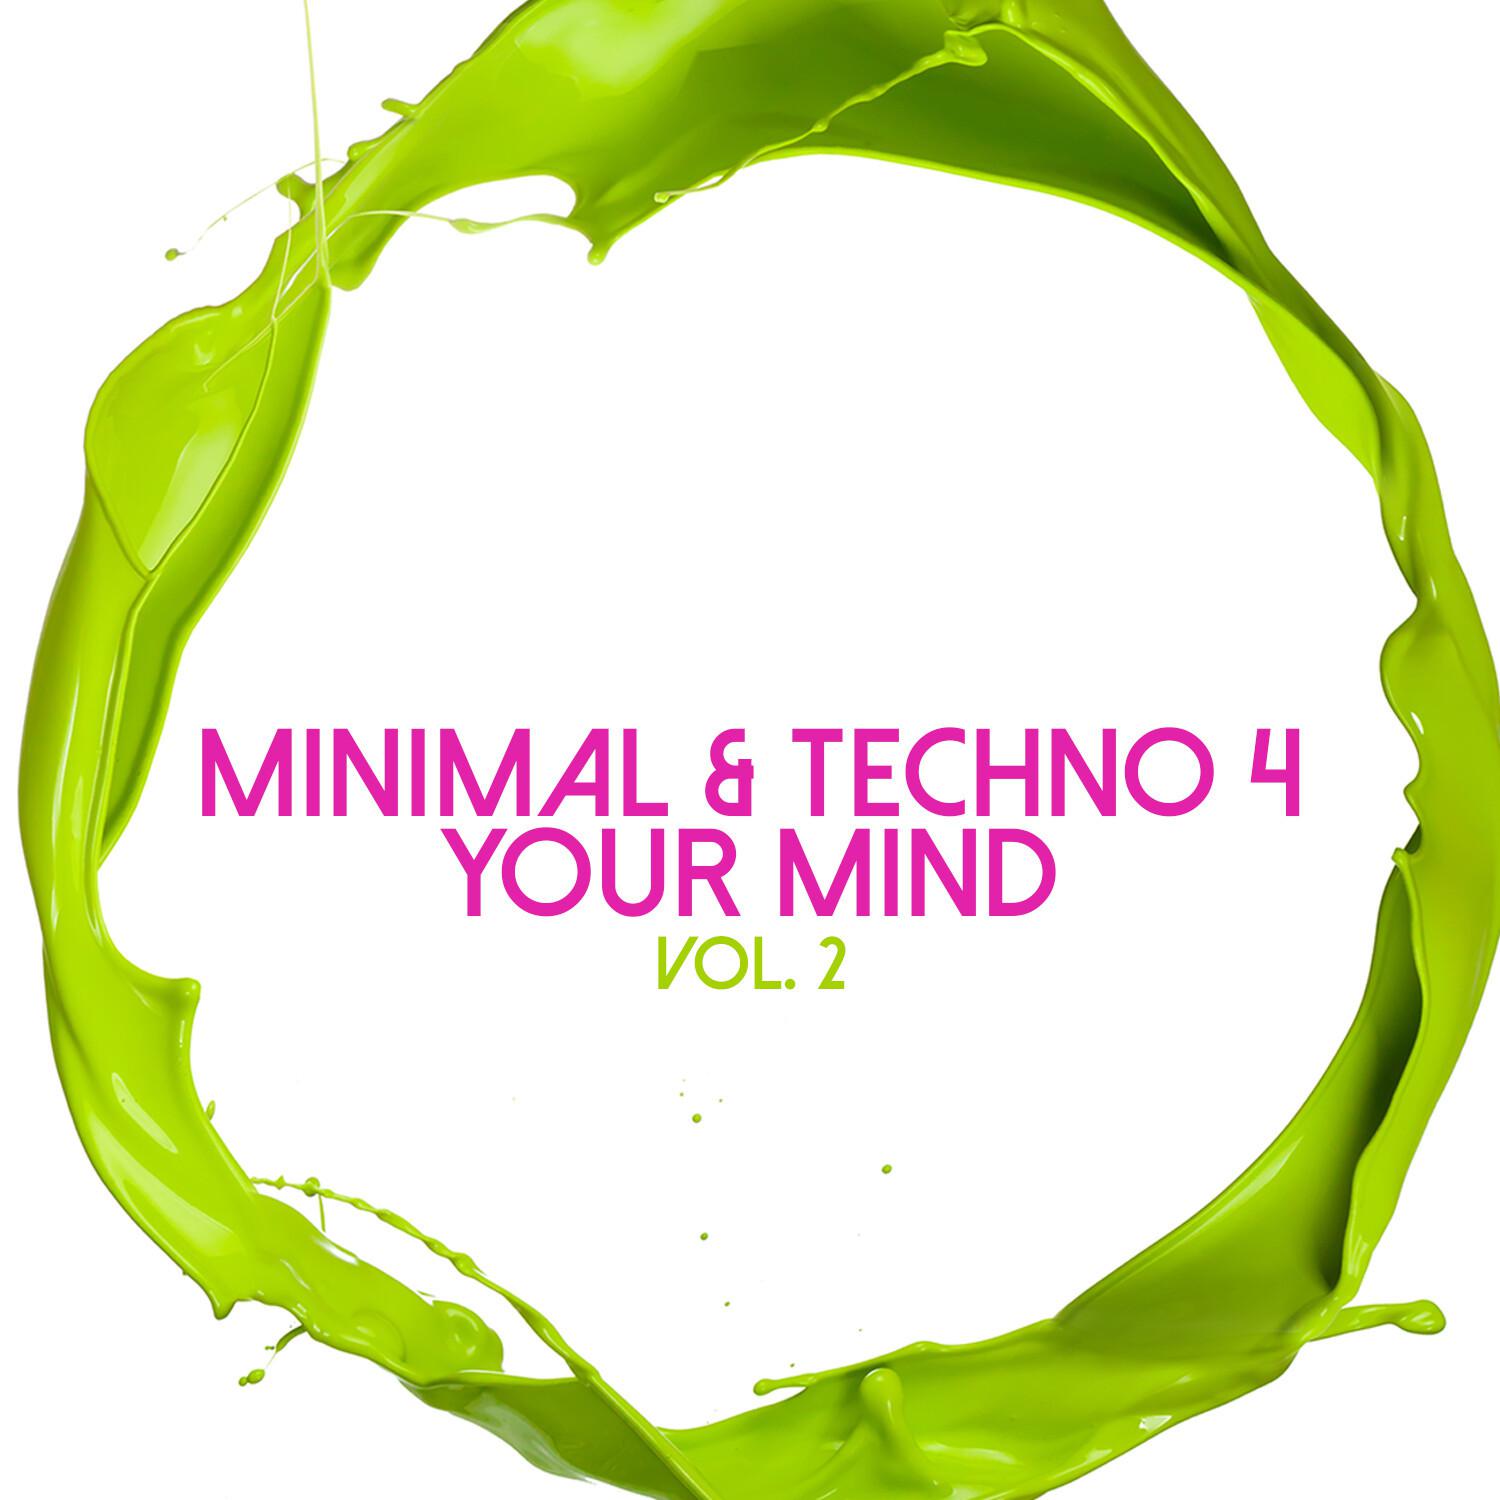 Minimal & Techno 4 Your Mind, Vol. 2